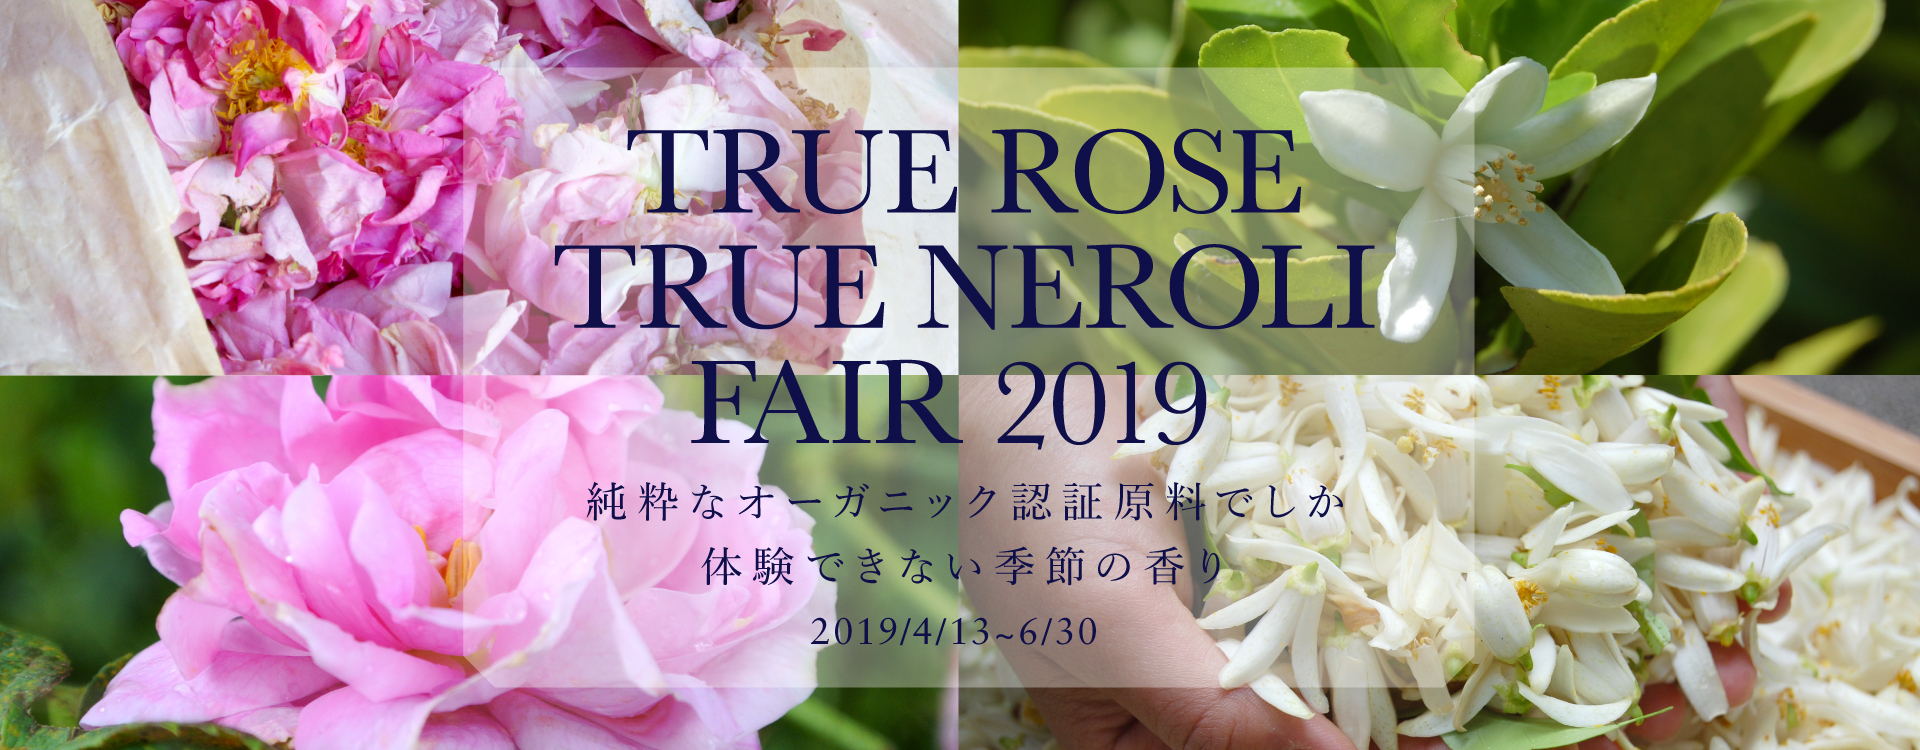 True Rose True Neroliフェア 19 ローズ ネロリ Artq Organics アロマティーク オーガニクス 公式オンラインショップ